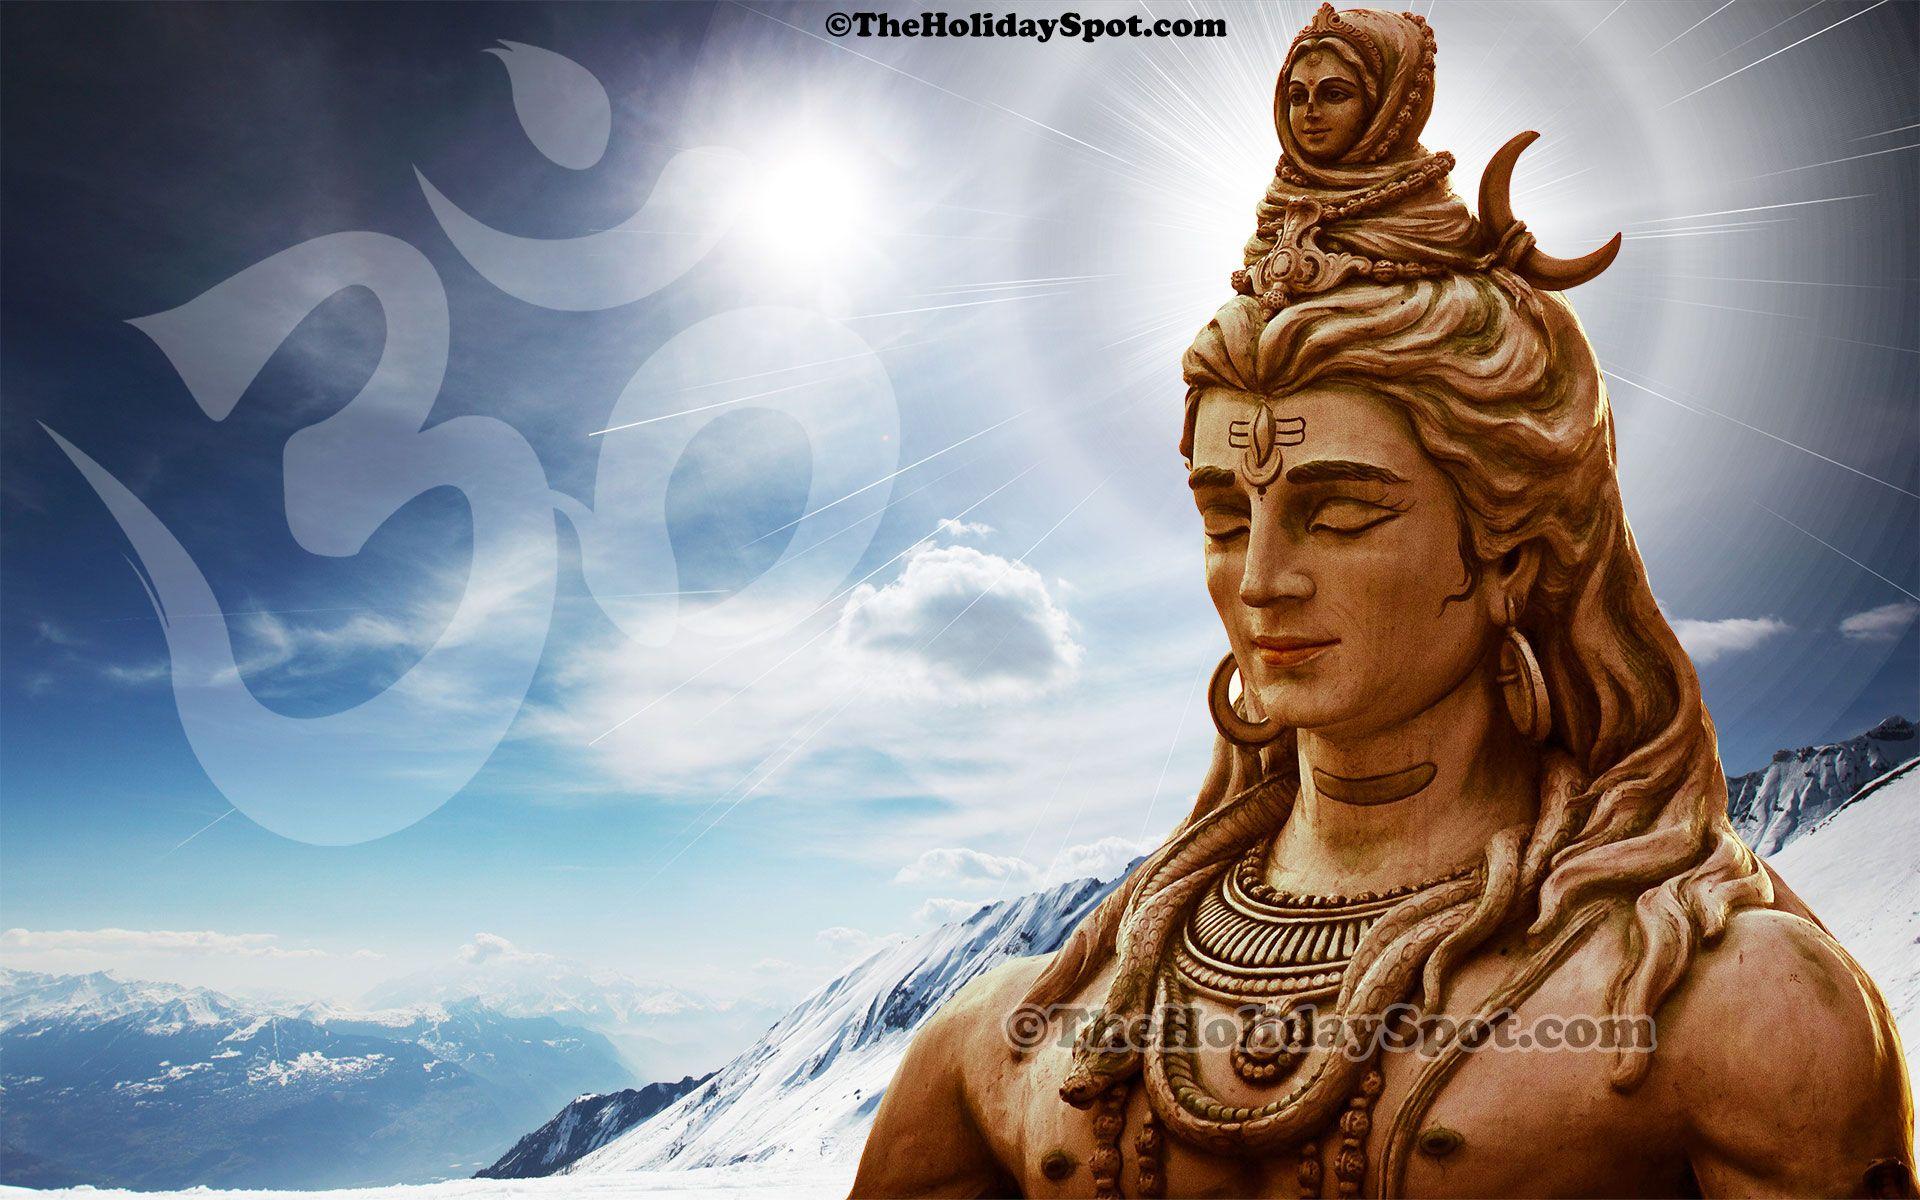  500 God Shiva Desktop Wallpaper  Full HD Photos  Images Download